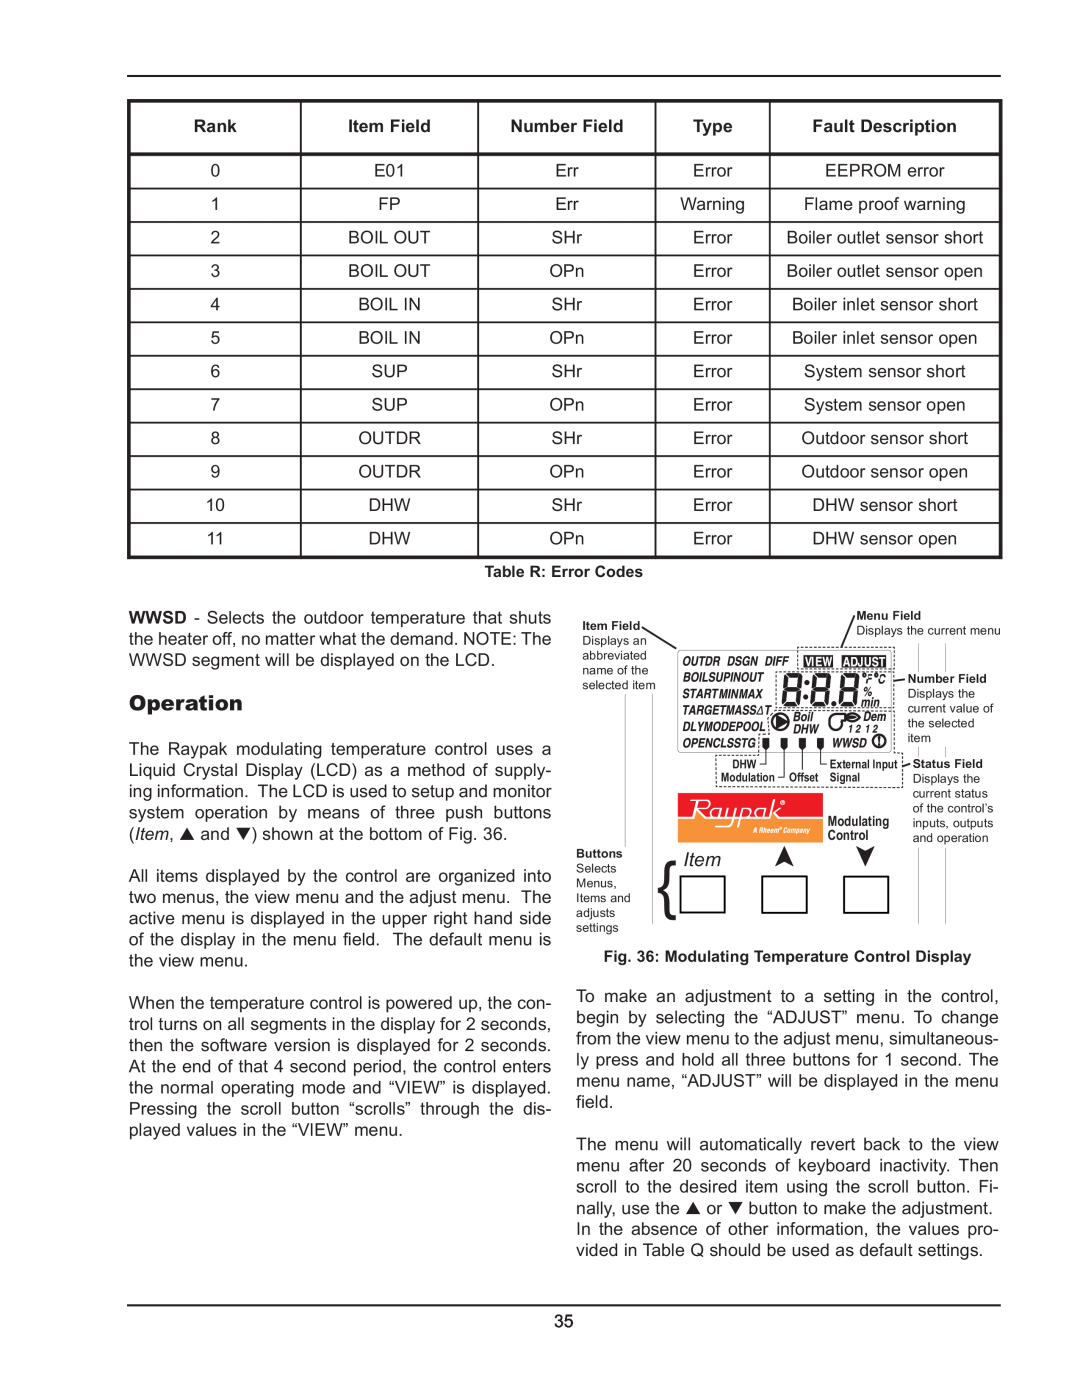 Raypak 503-2003 manual Rank, Number Field, Type, Fault Description 